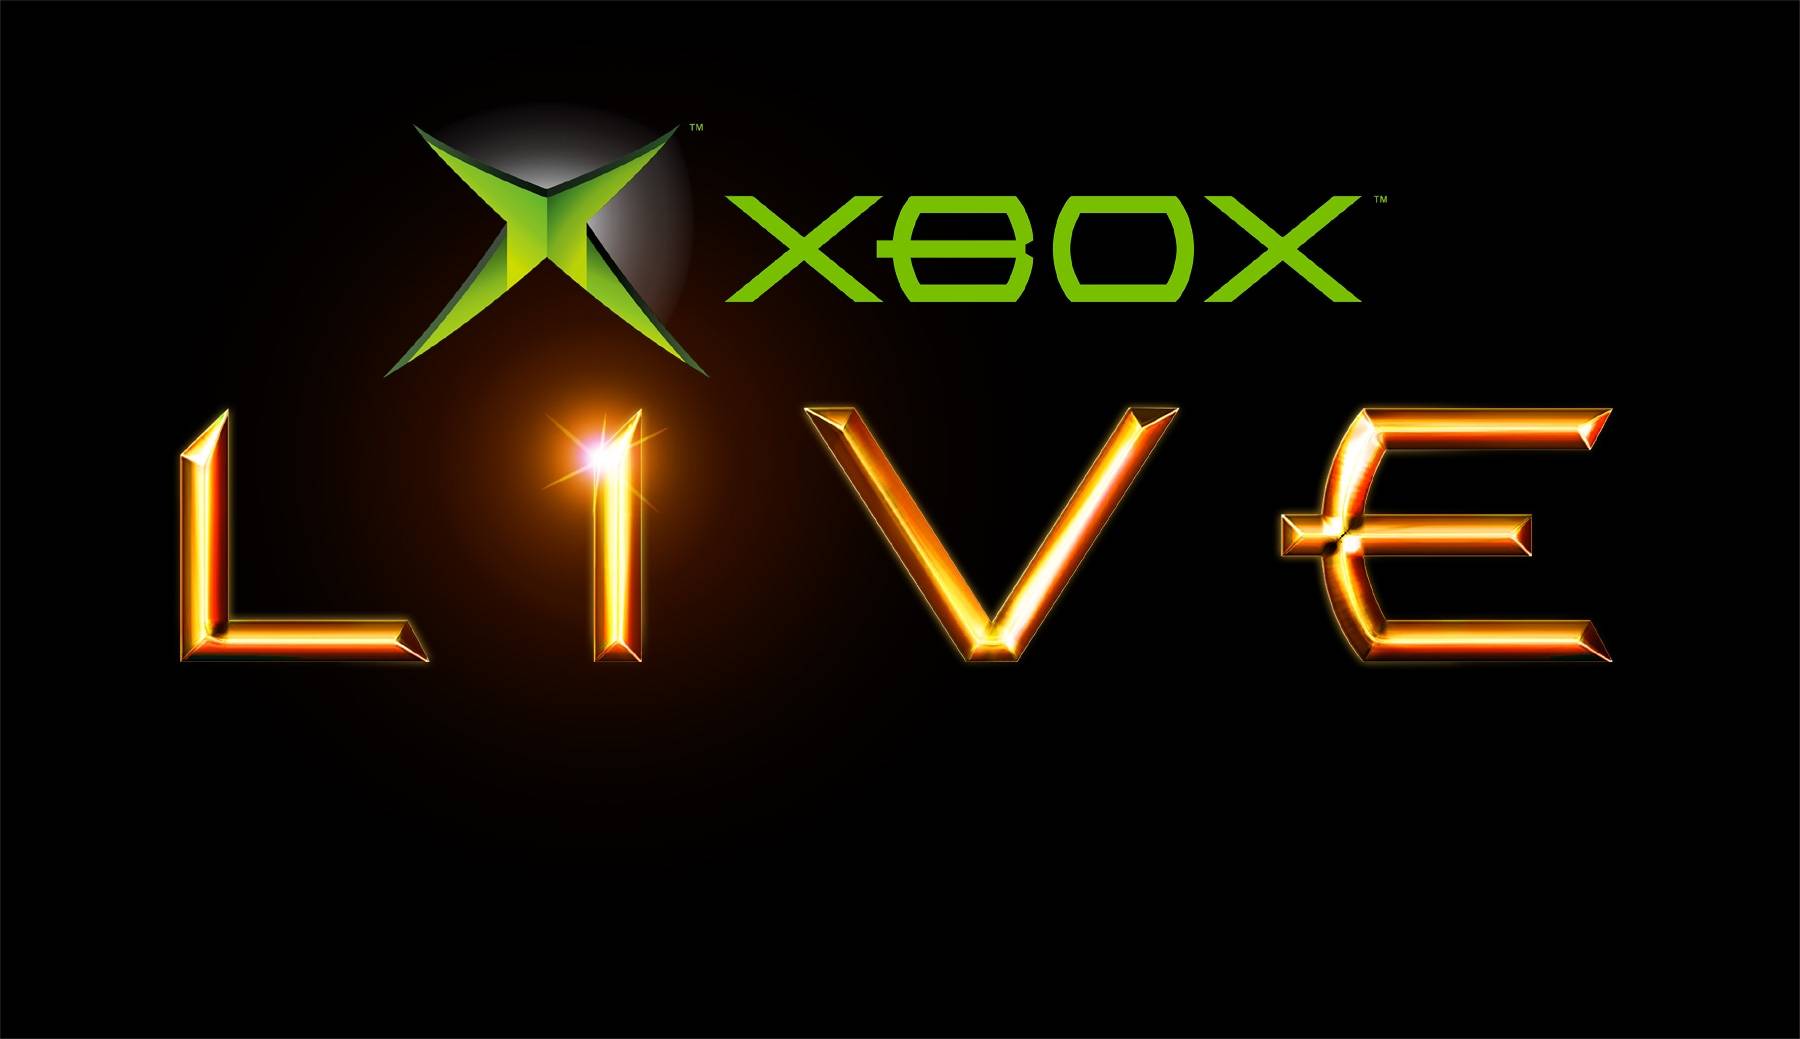 Cool Life Xbox Live Wallpaper